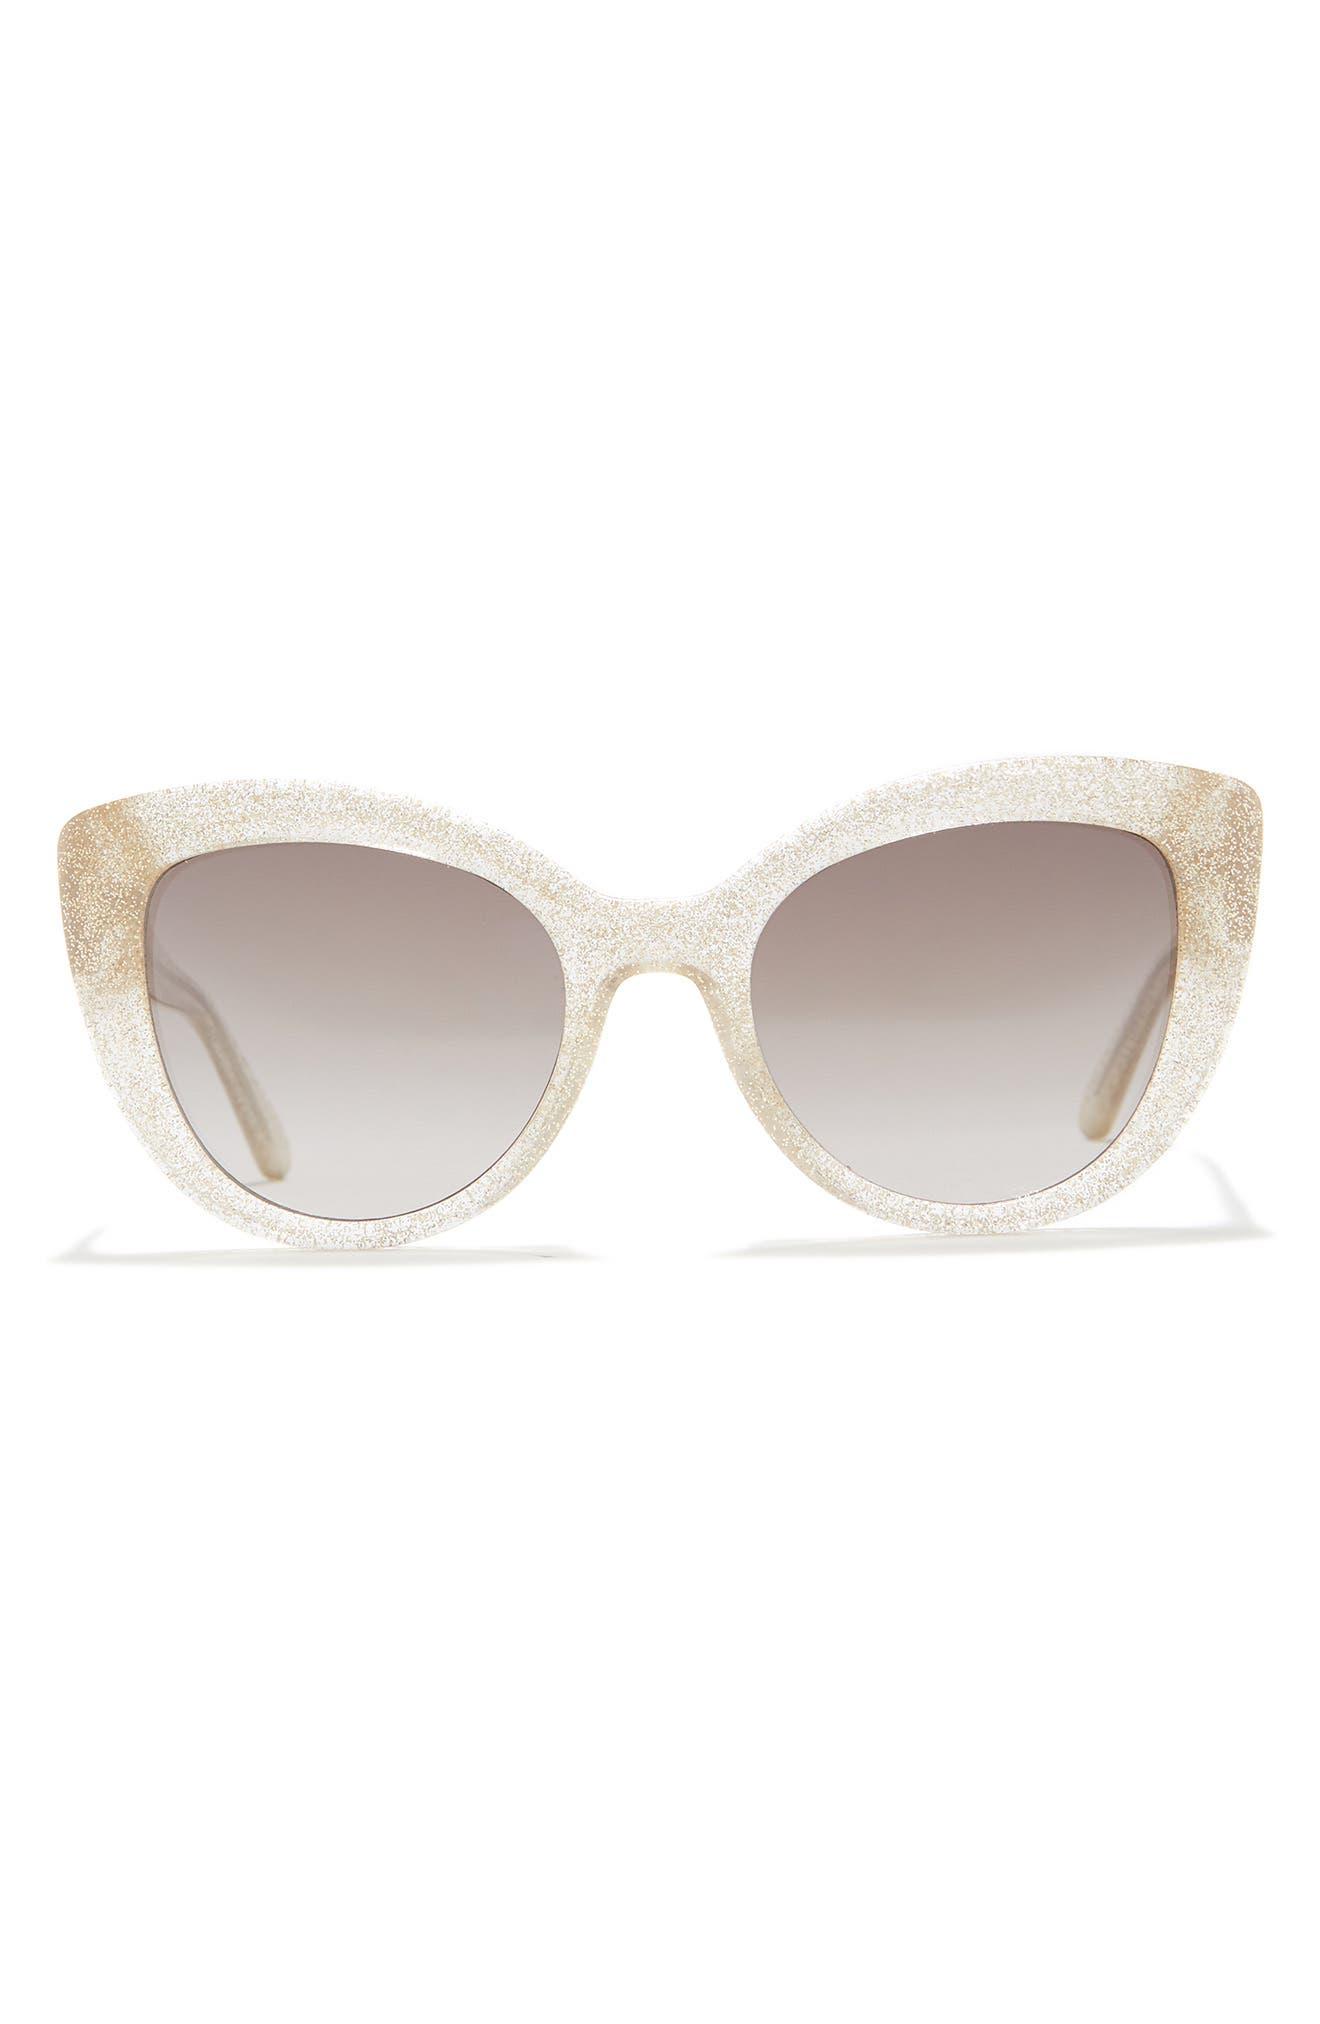 Kate Spade Labrenda 51mm Sunglasses in White | Lyst